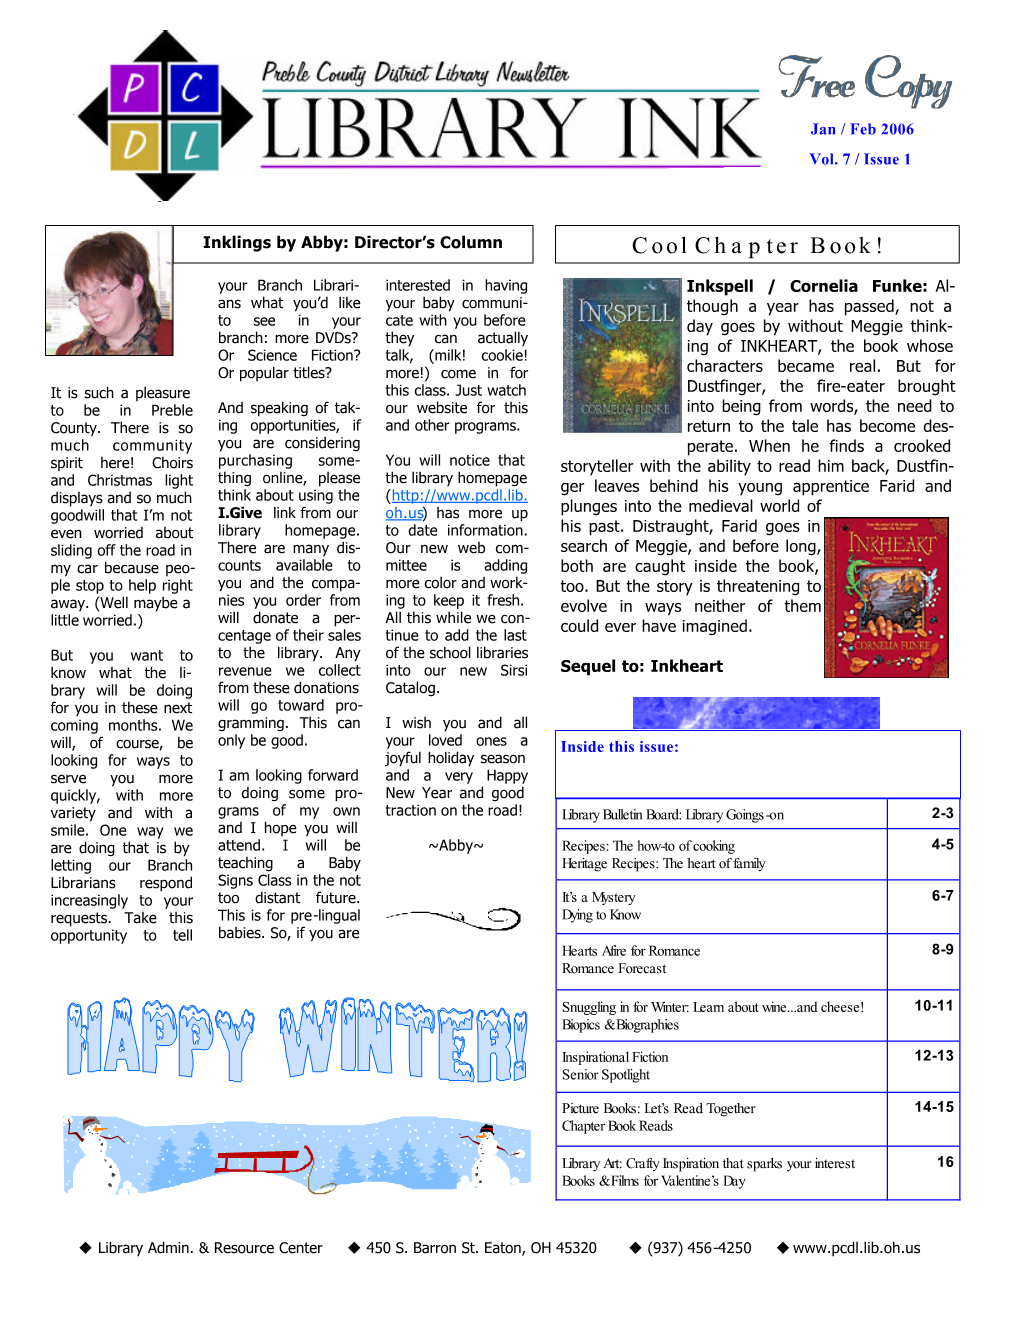 Janfeb Newsletter 2006